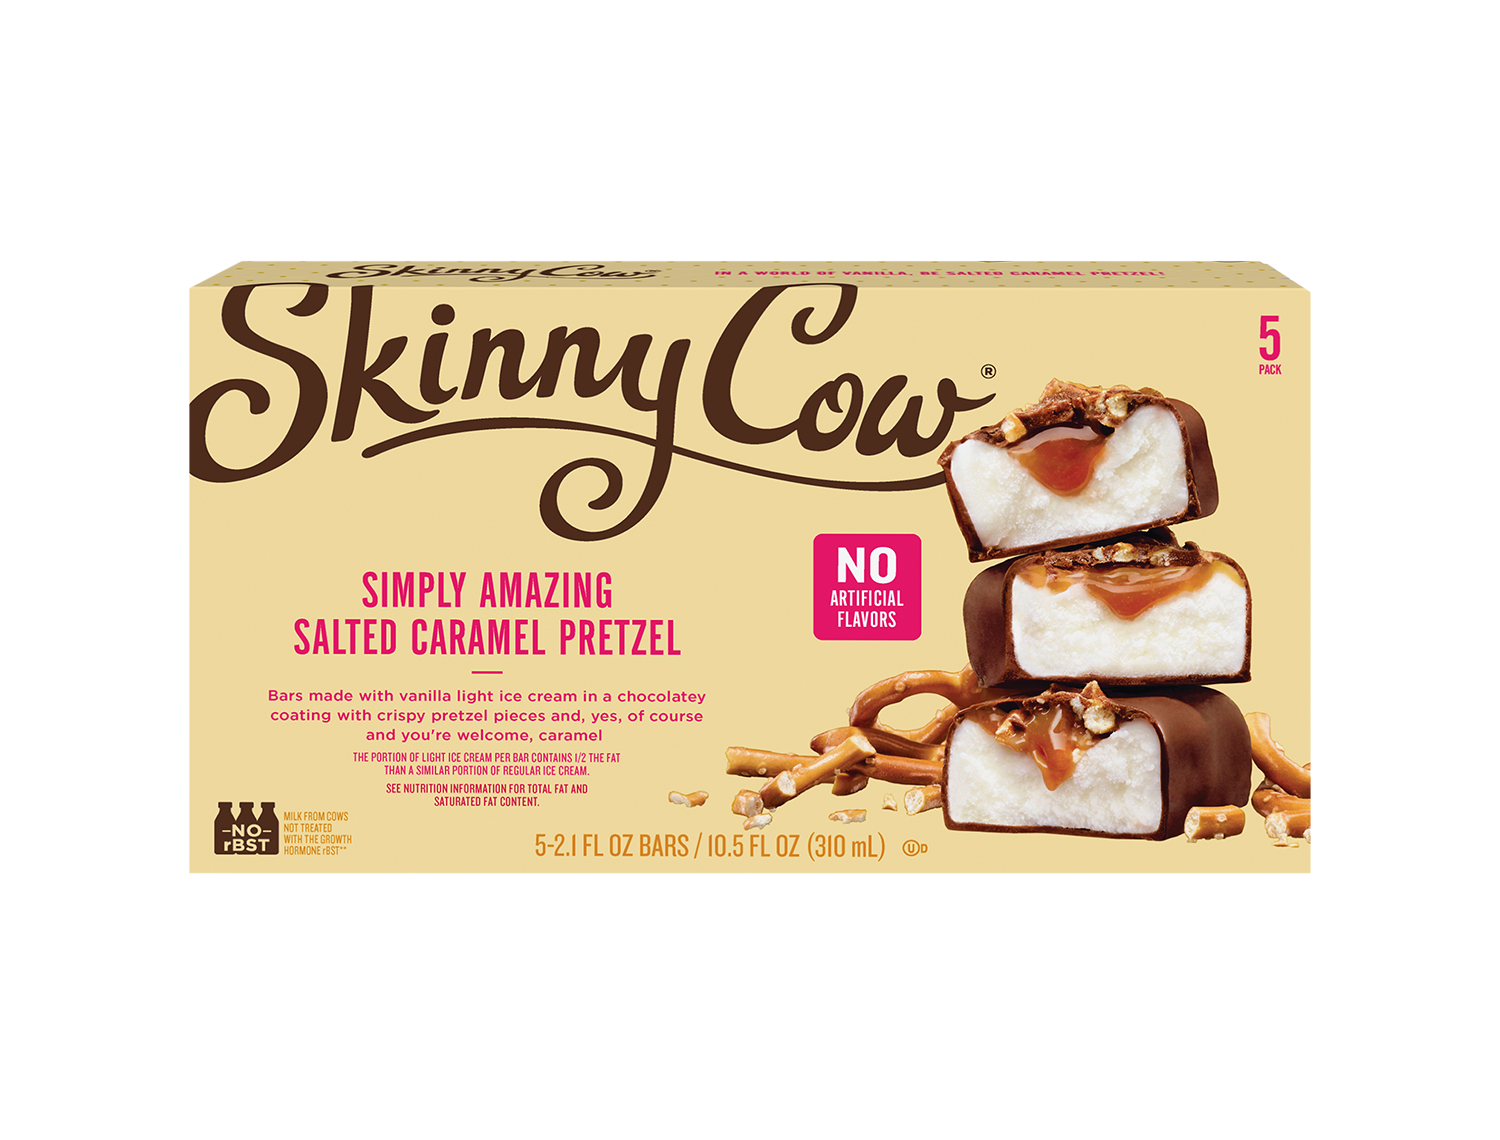 skinny cow simply amazing vanilla salted caramel salted pretzel ice cream bar box